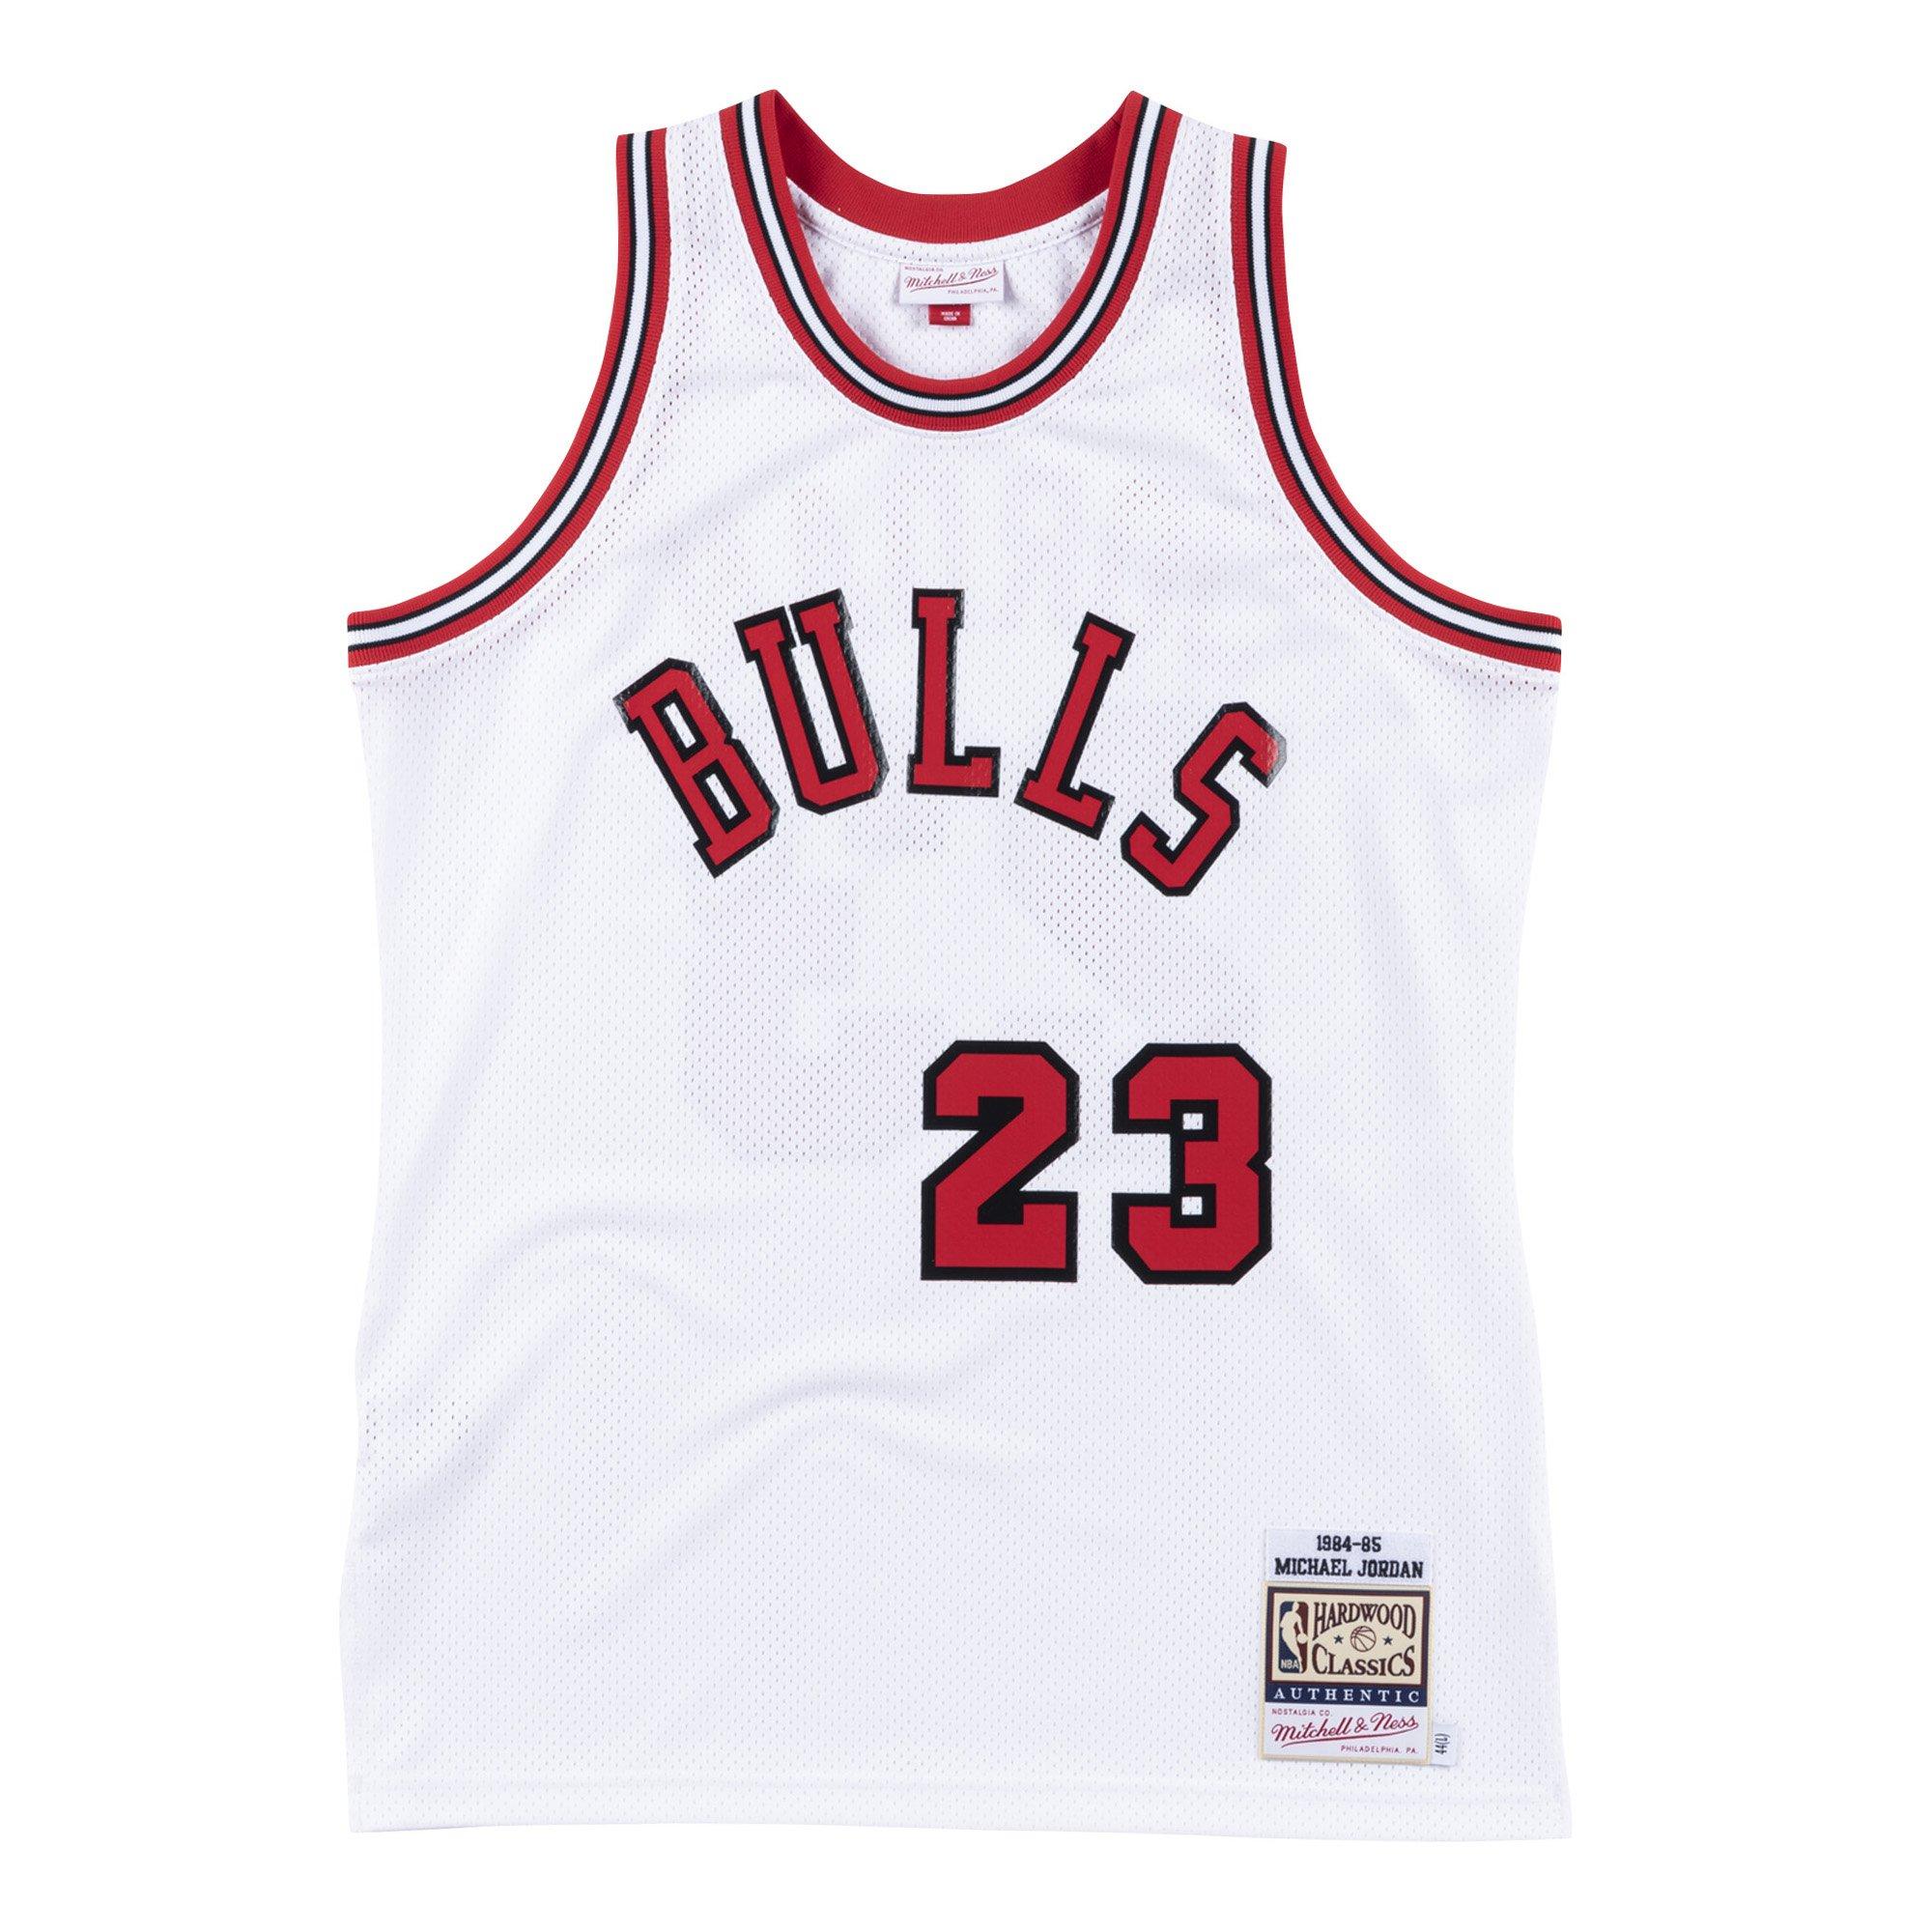 ROOKIE GOAT . Michael Jordan Chicago Bulls Jersey Size 2XL .   . #chicagobulls…